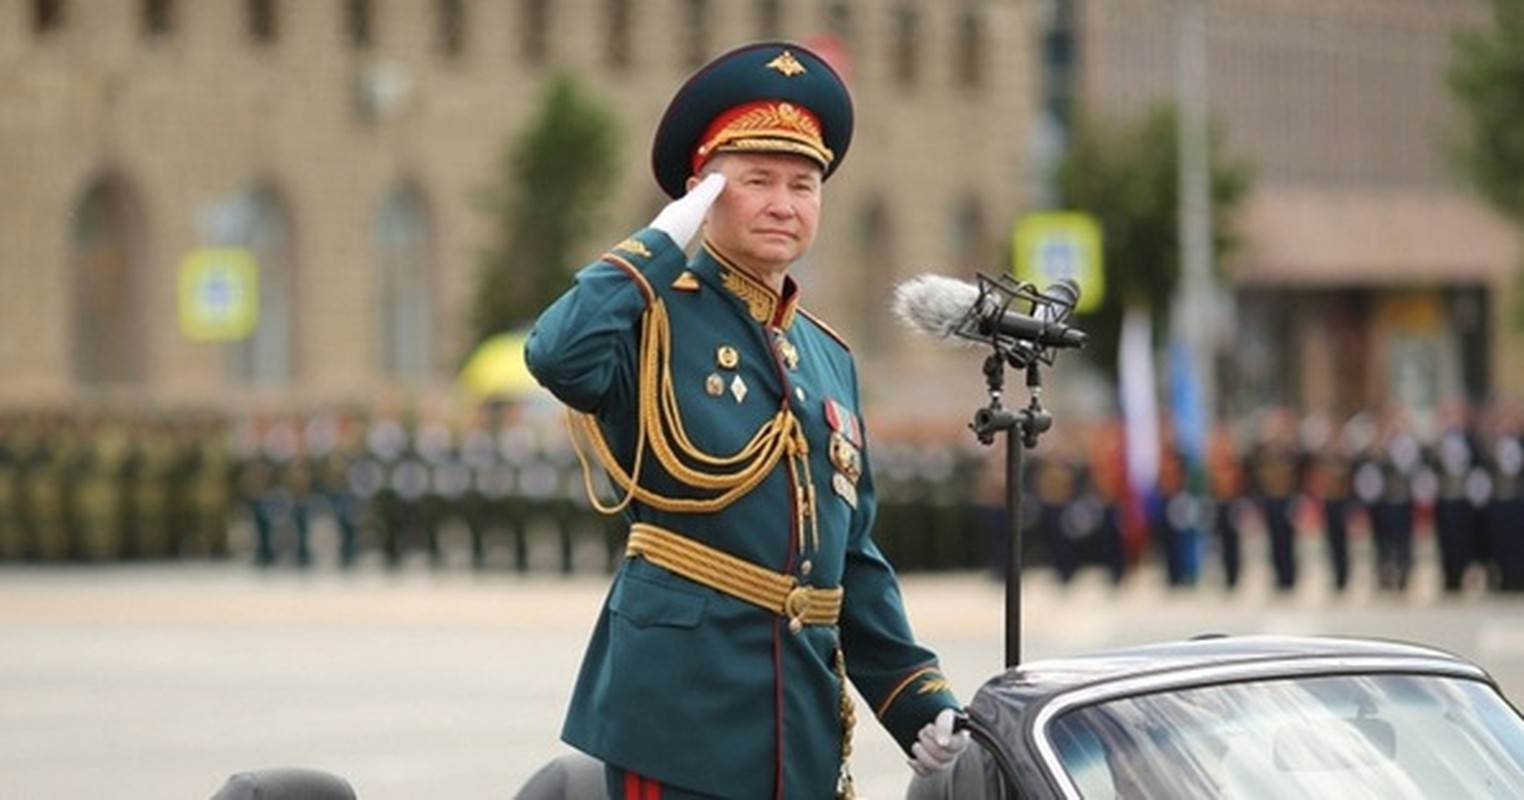 Tuong gioi nhat cua Nga danh dau cung khien quan Ukraine khiep so-Hinh-2